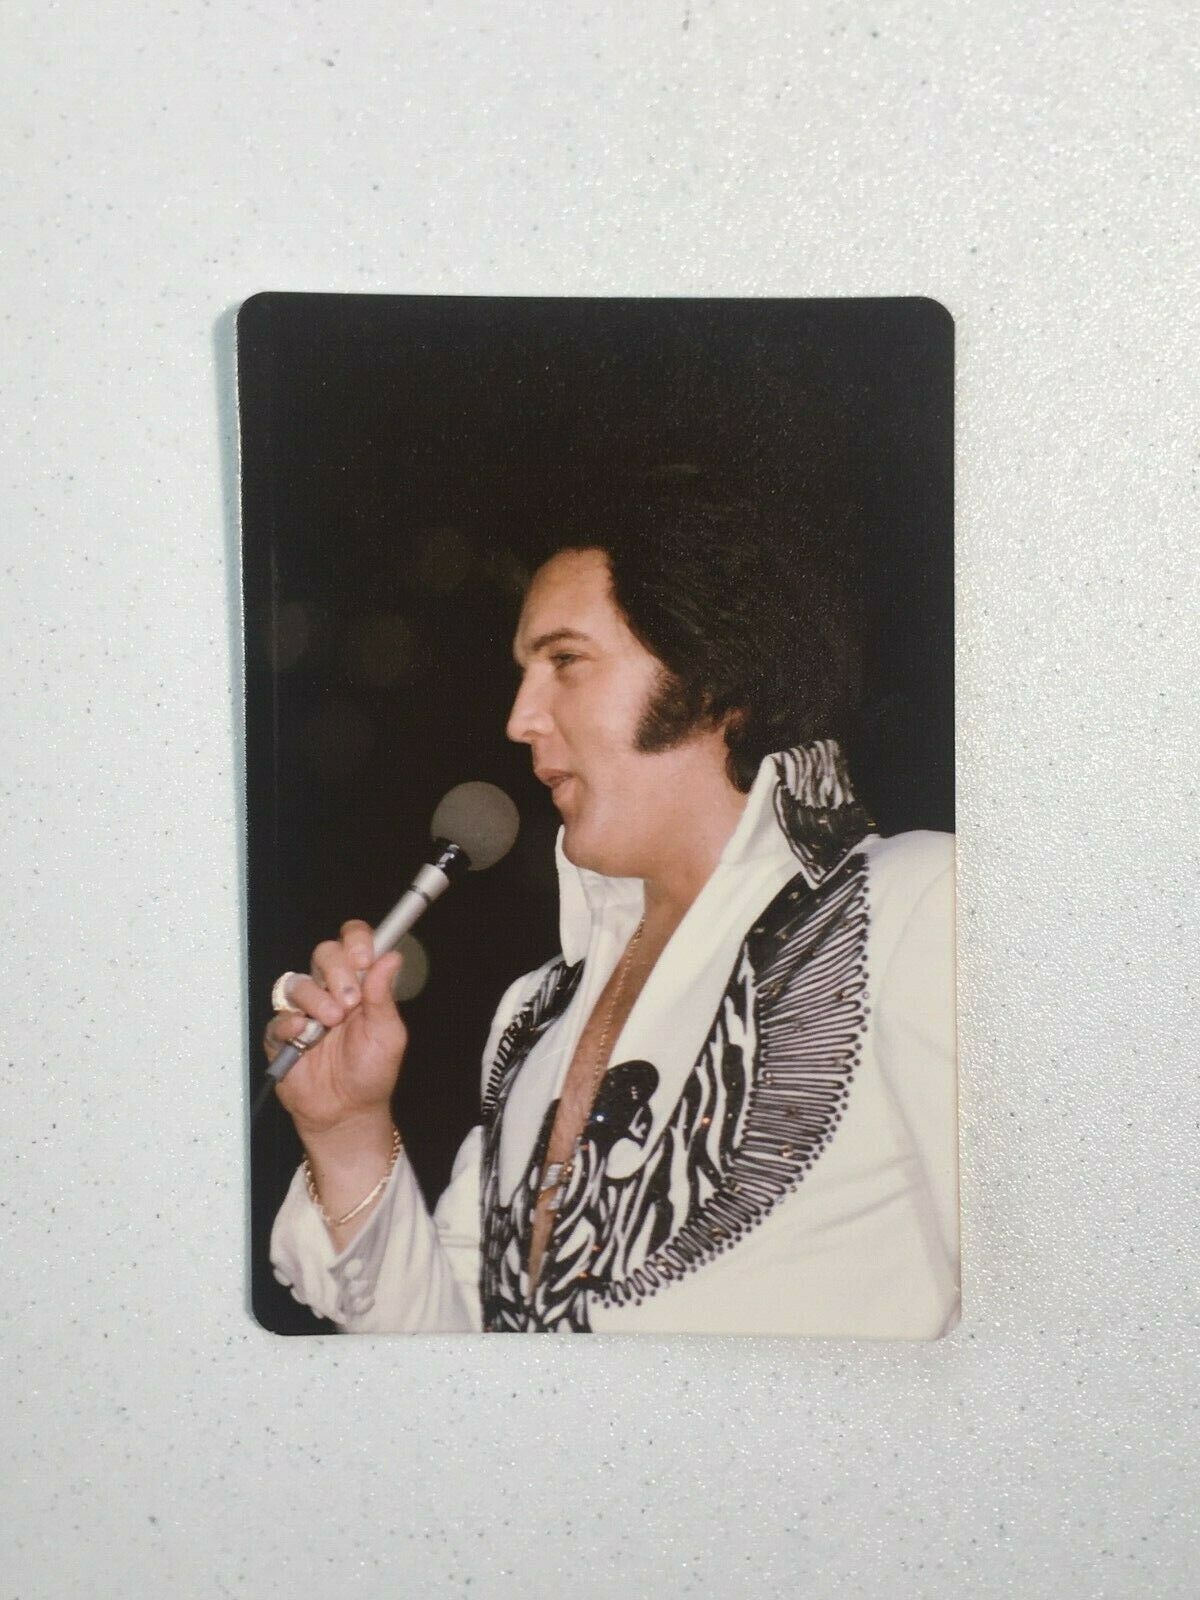 Elvis Presley Original Vintage Kodak Photo Richfield Oh July 10, 1975 L. Leech